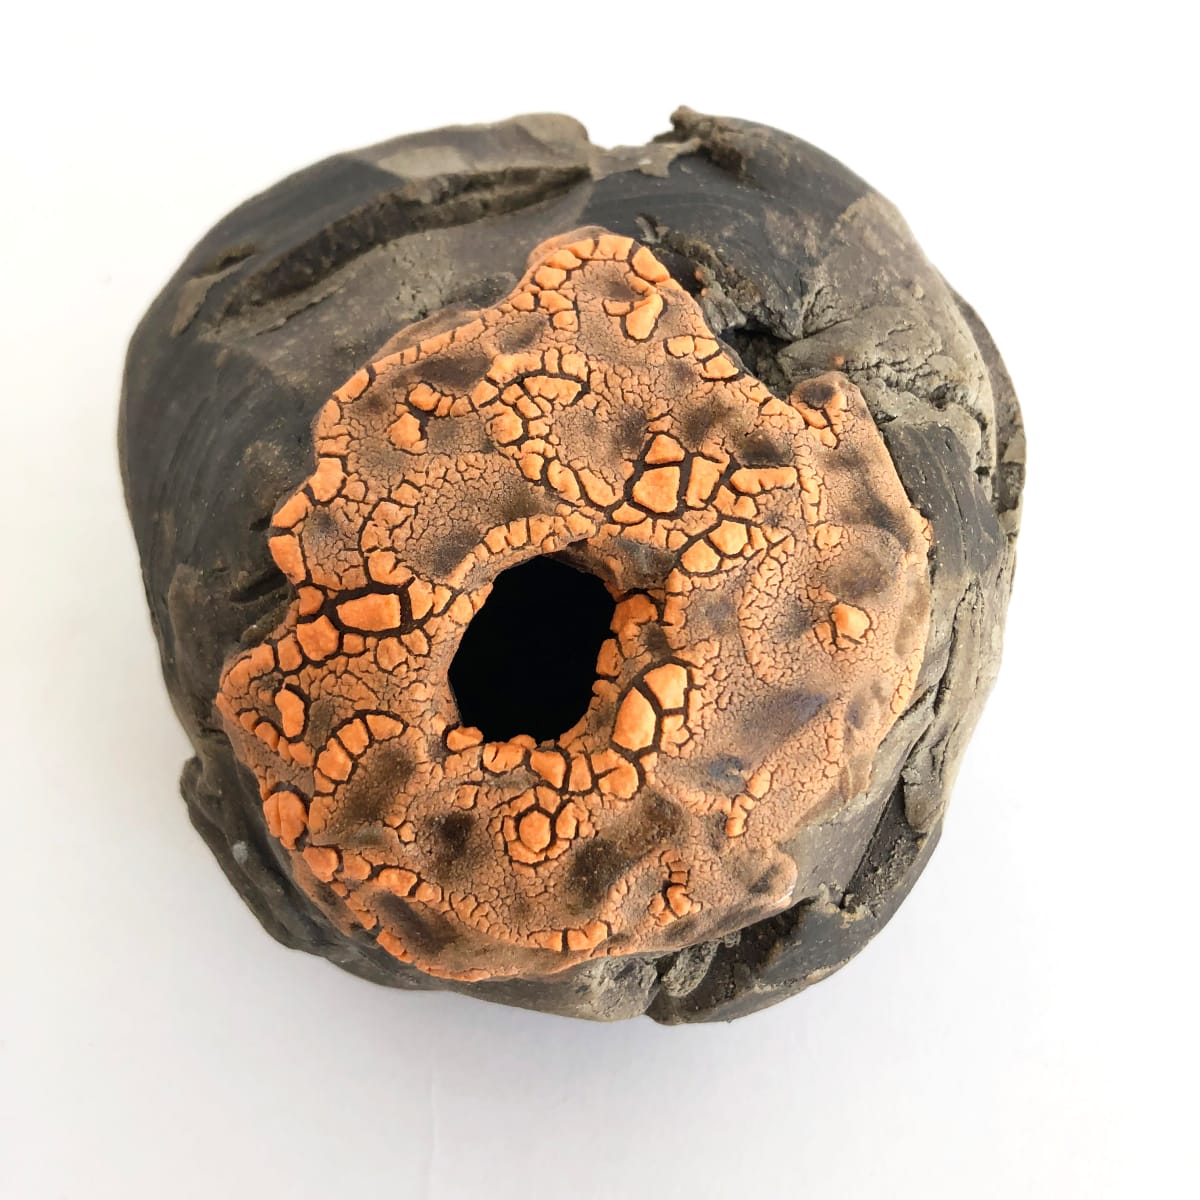 Small geode with orange lichen opening by Lynn Basa 